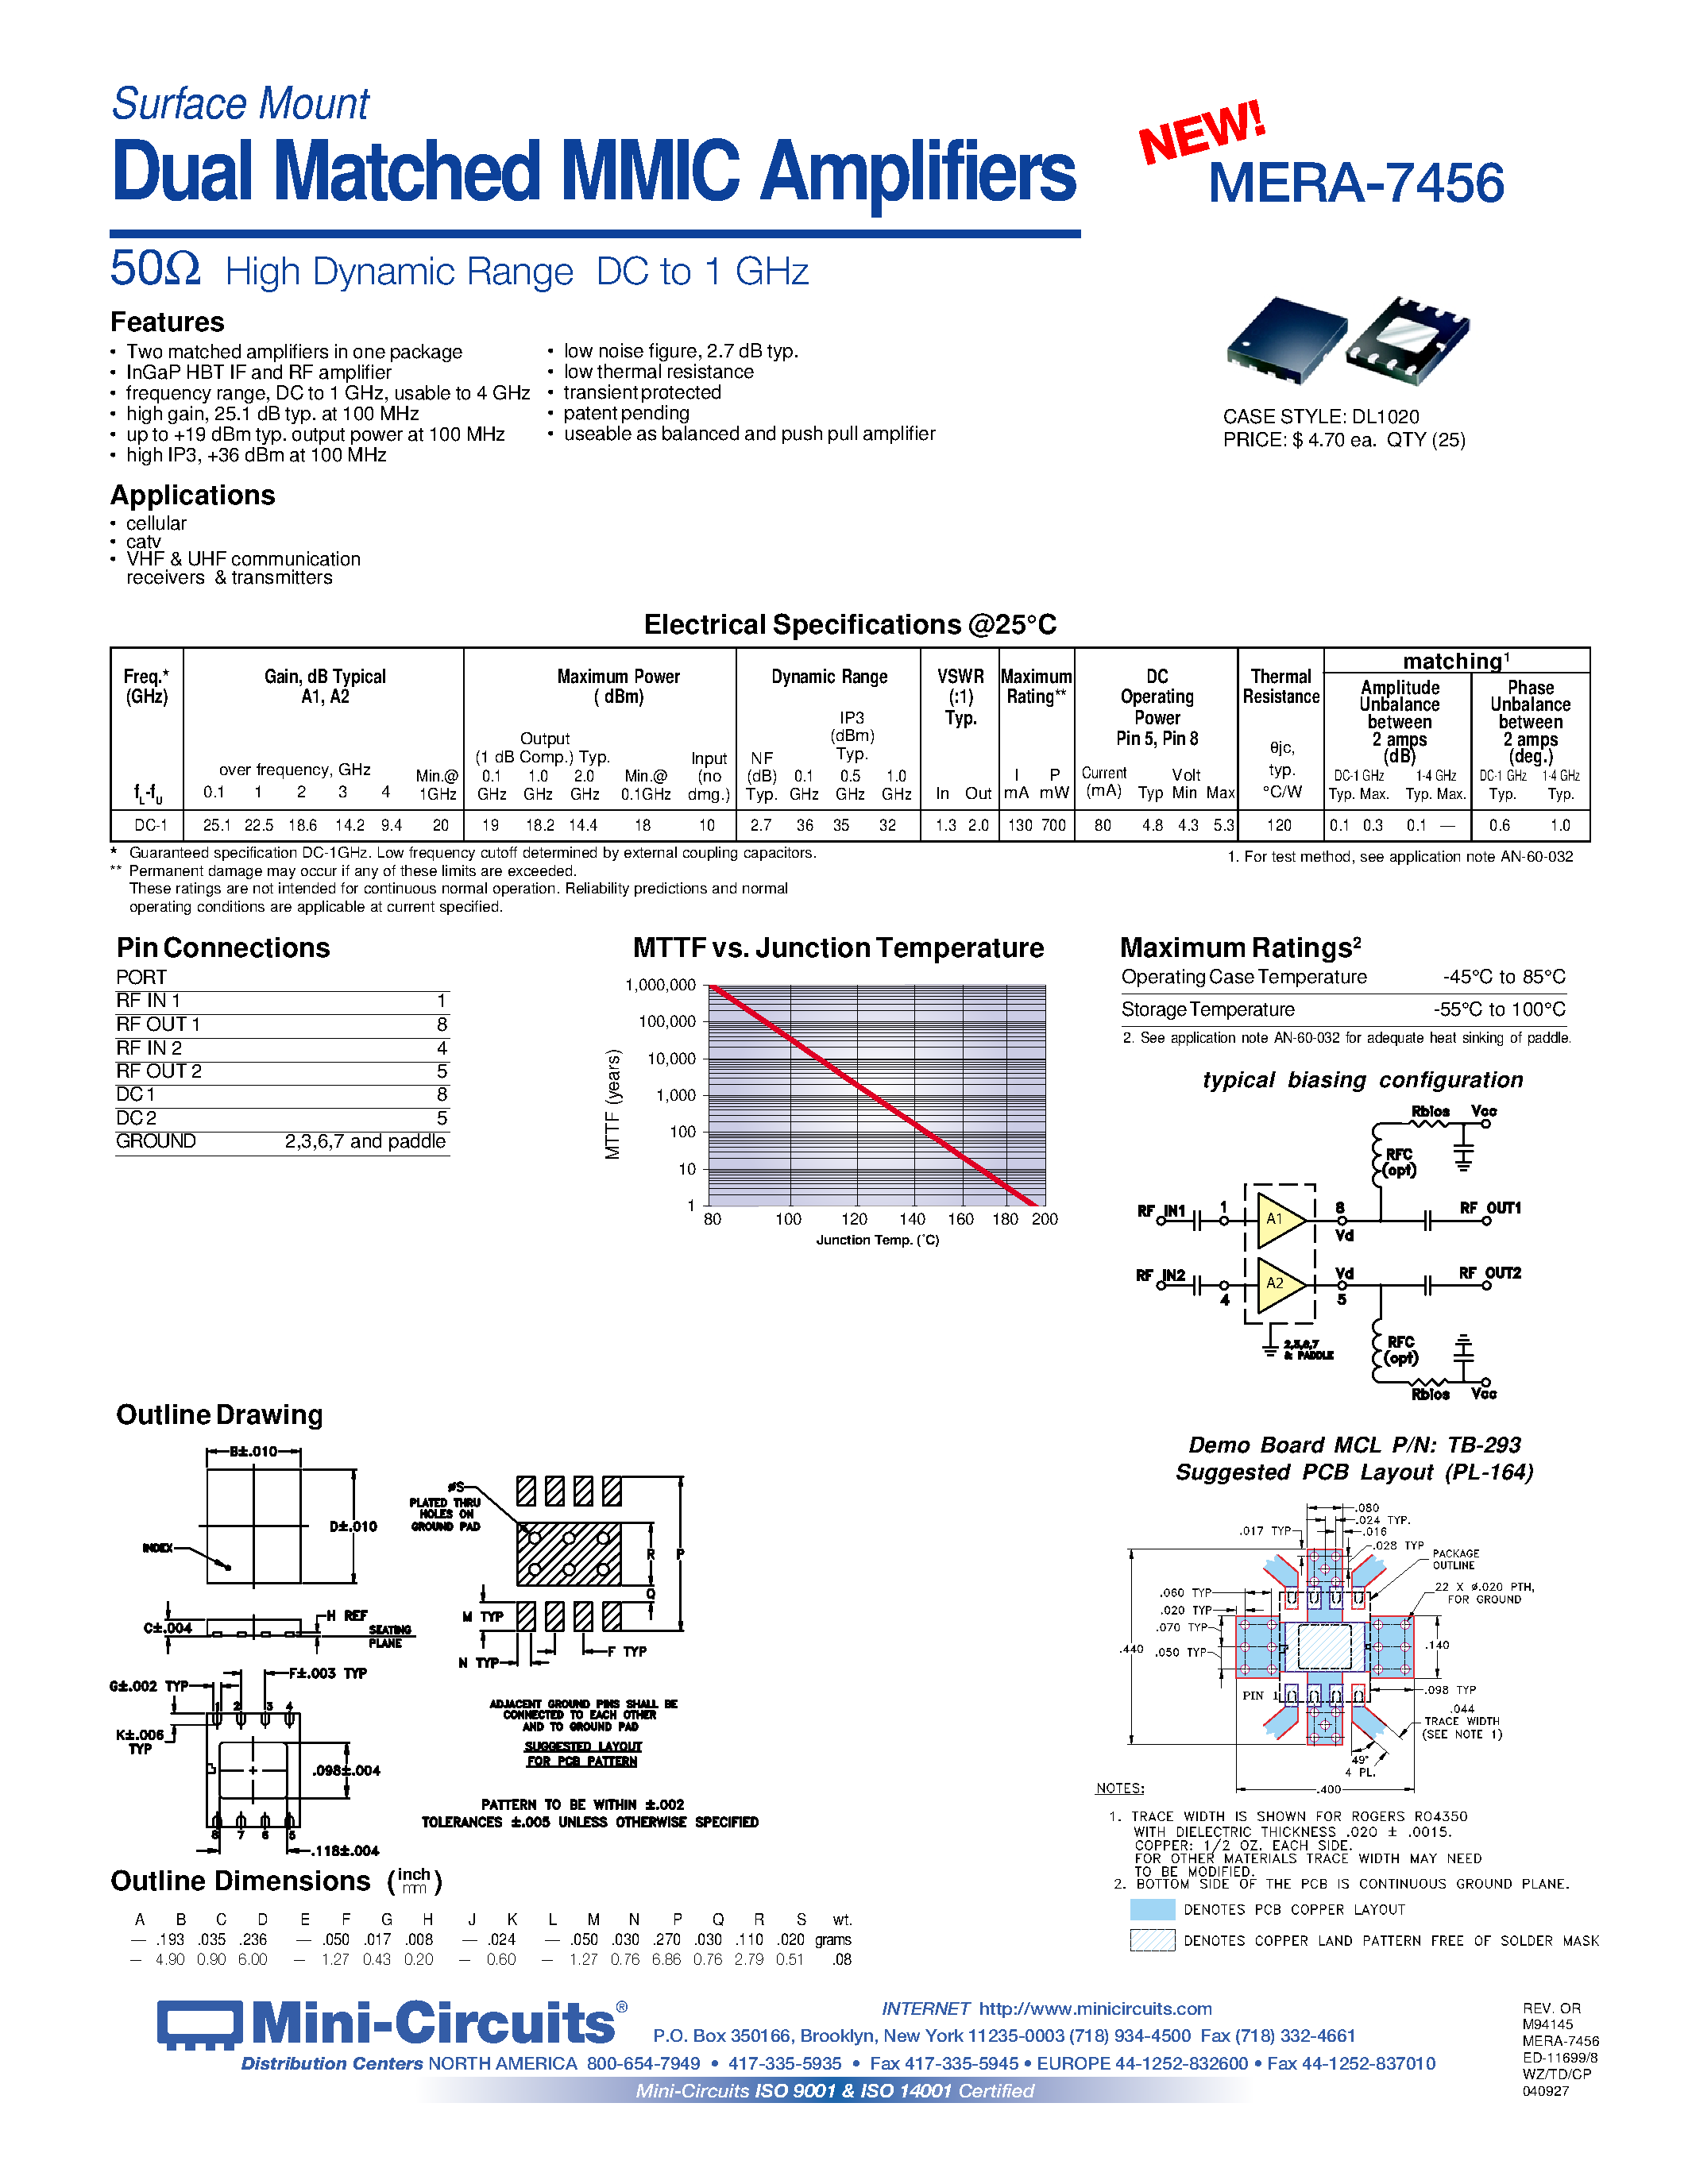 Datasheet MERA-7456 - Dual Matched MMIC Amplifiers page 1